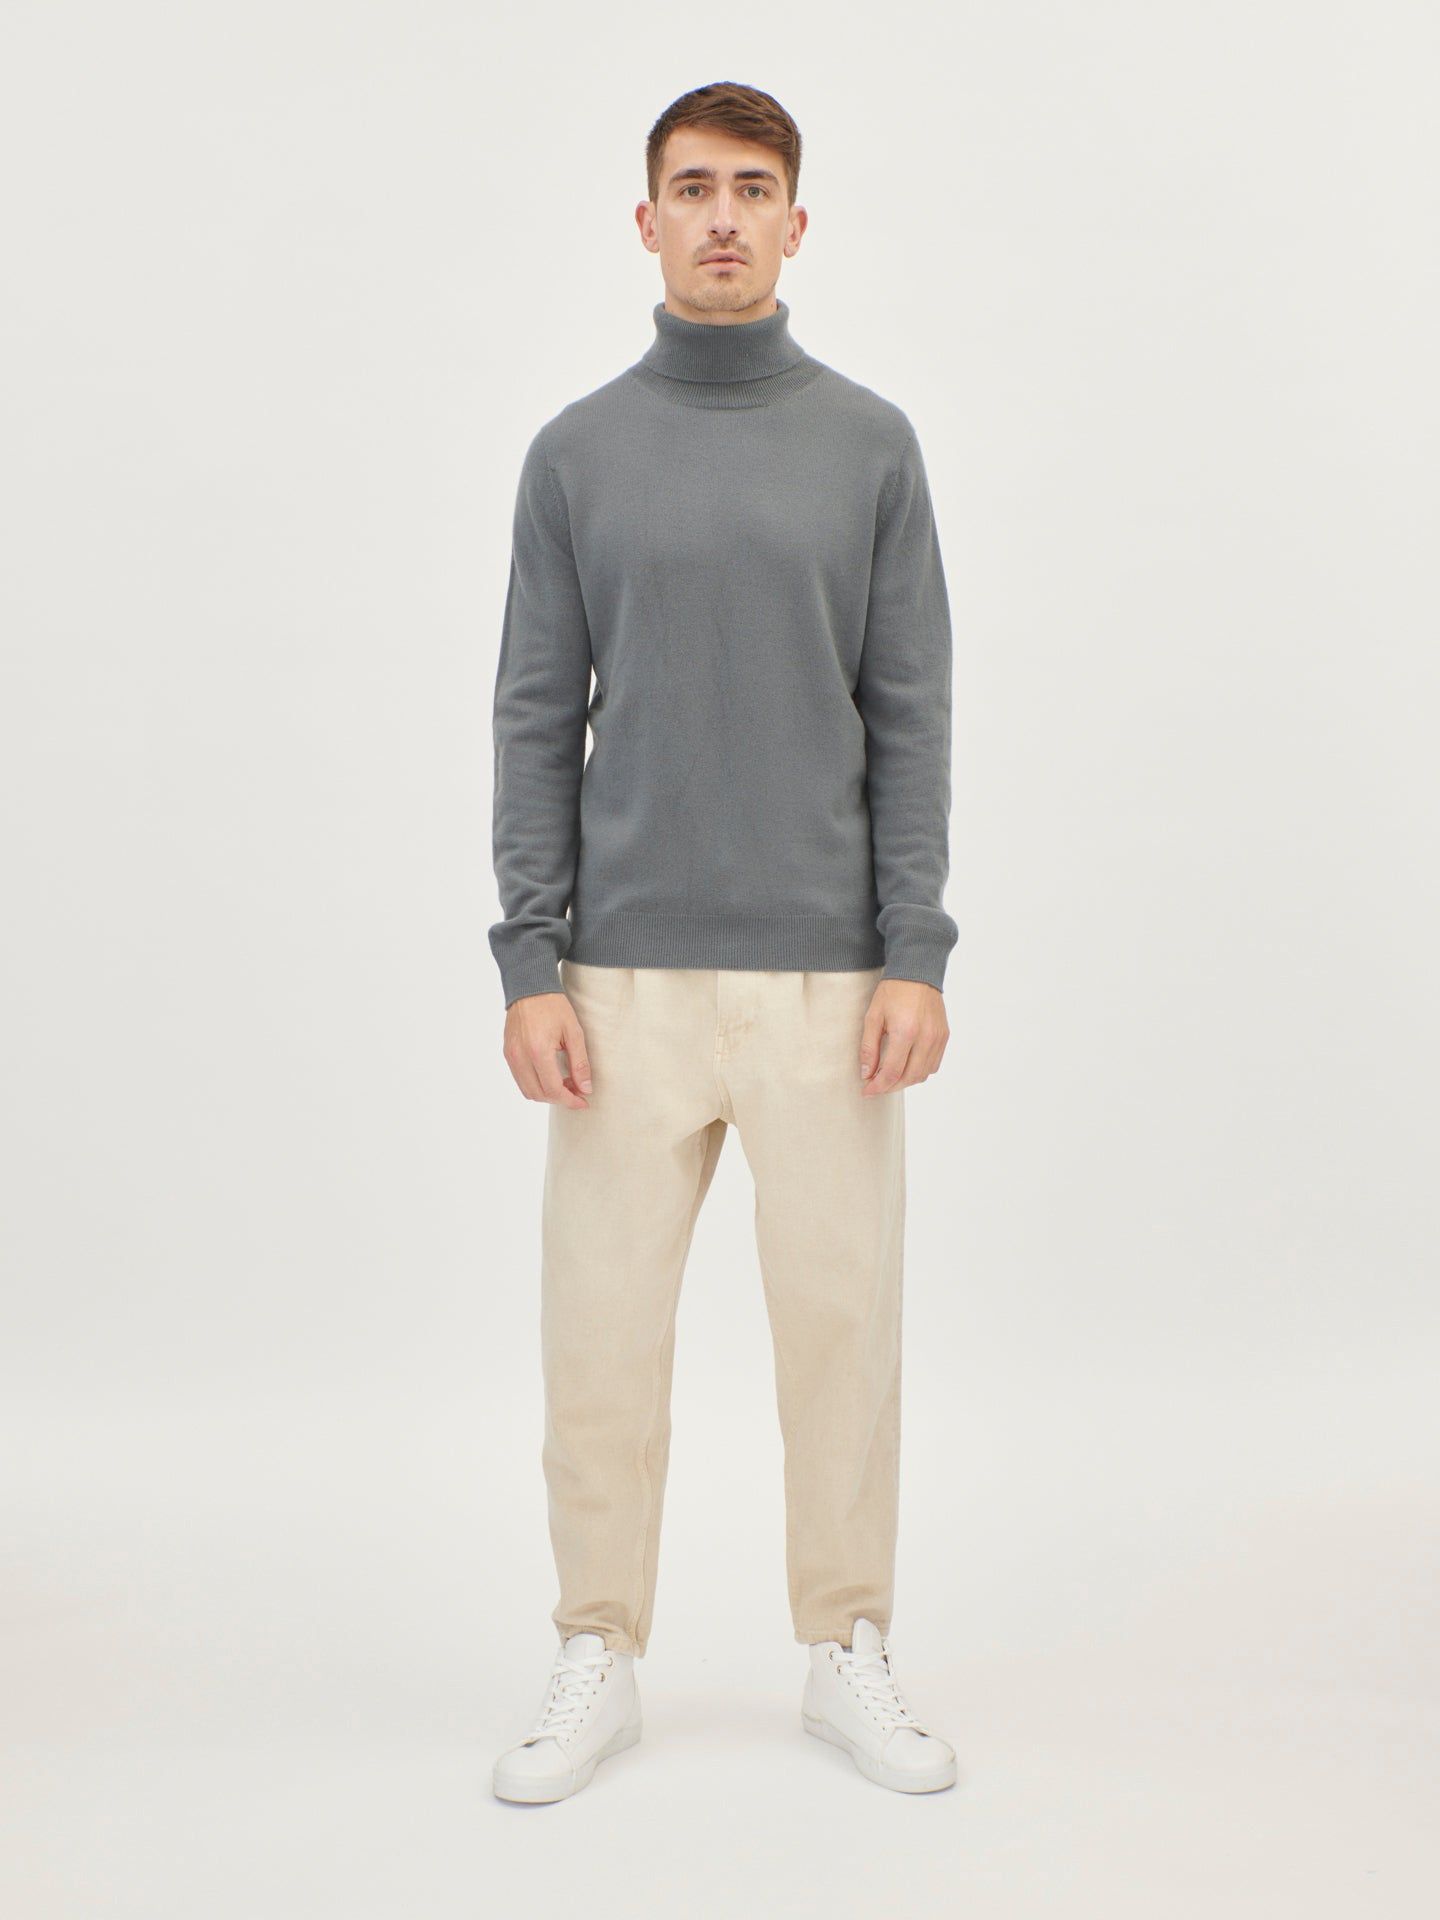 Men's Cashmere Basic Slim Fit Turtle Neck Neutral Gray - Gobi Cashmere